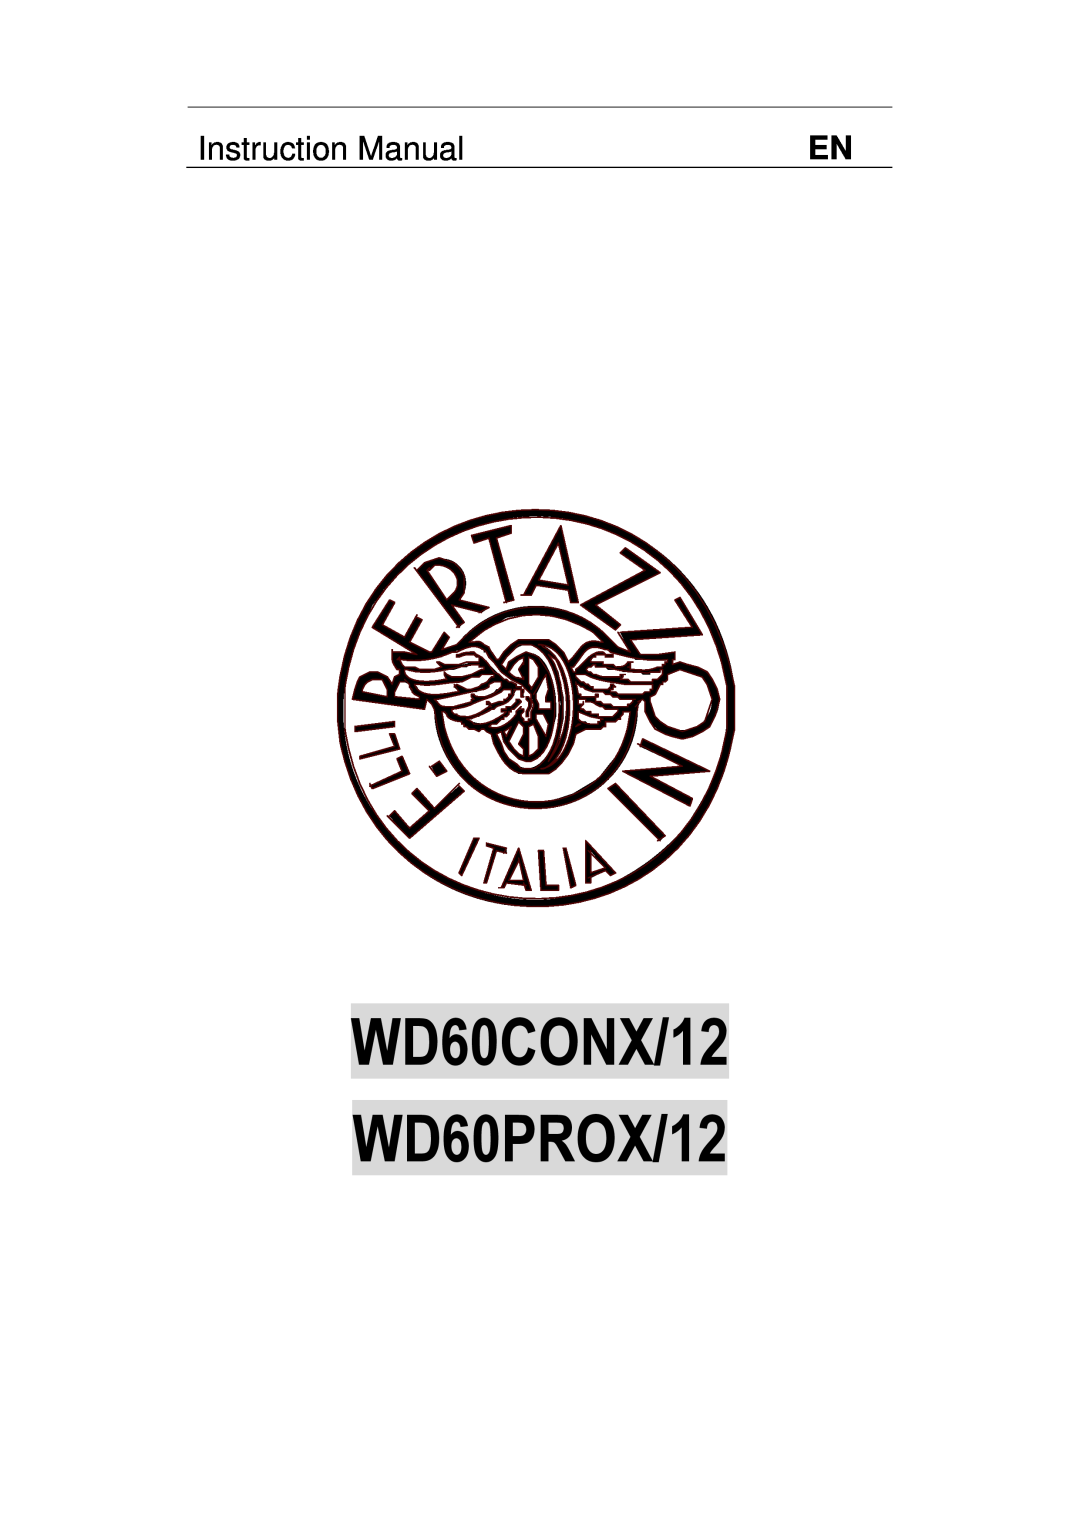 Bertazzoni instruction manual WD60CONX/12 WD60PROX/12 